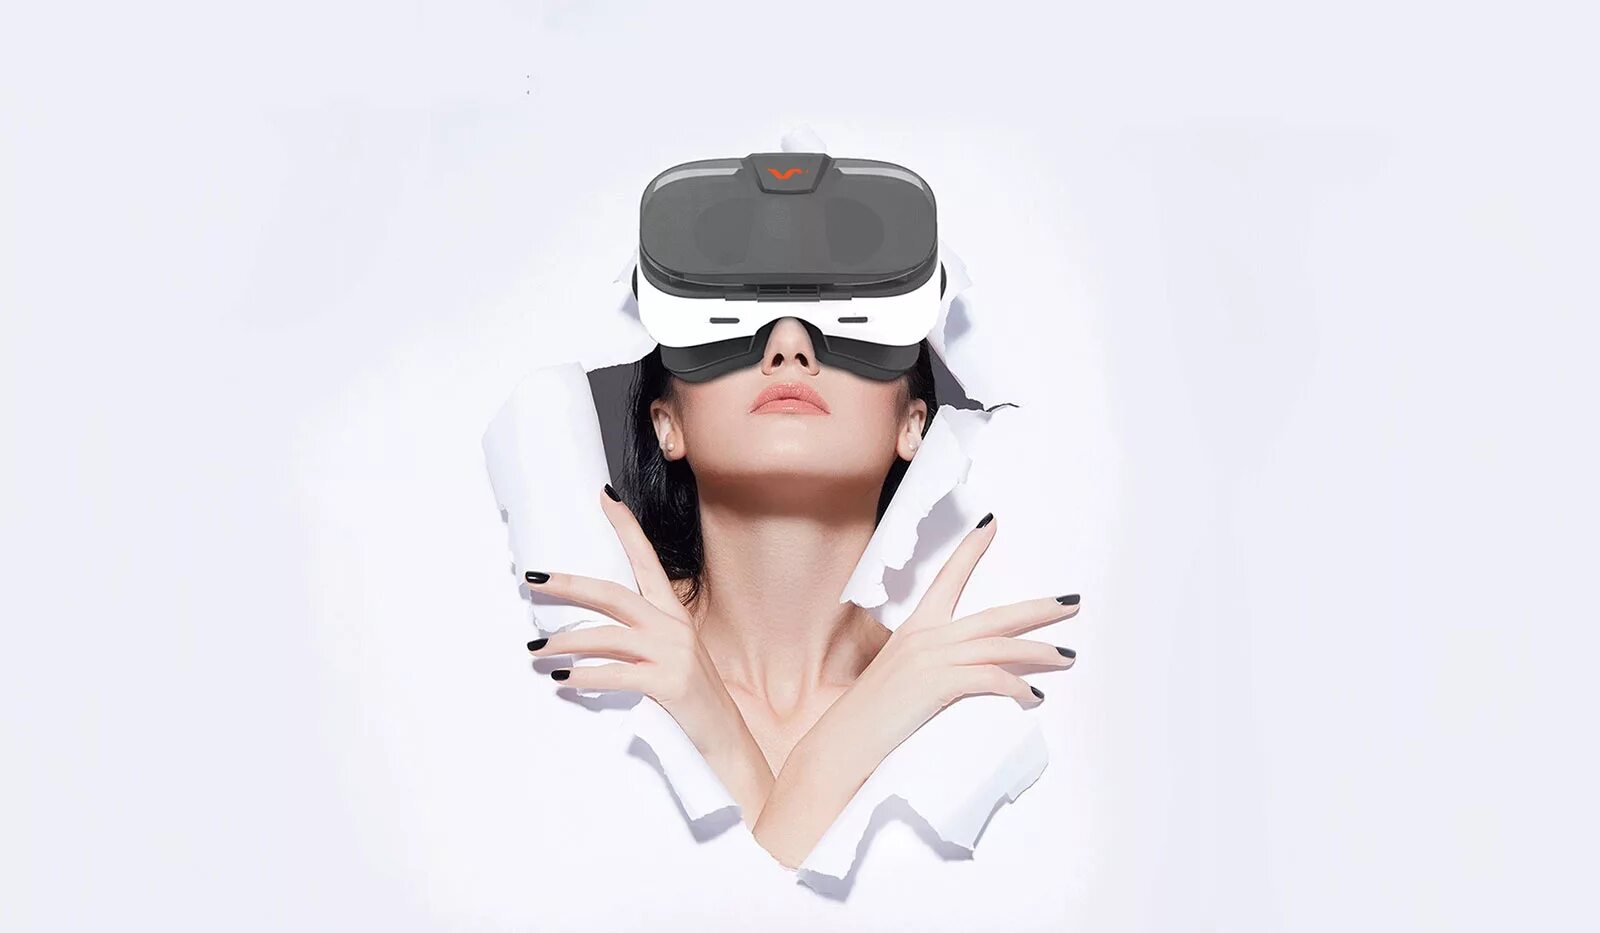 Vr реклама. VR шлем 360max. Очки виртуальной реальности 360 VR. Шлем виртуальной реальности 3glasses s1. Девушка в очках виртуальной реальности.